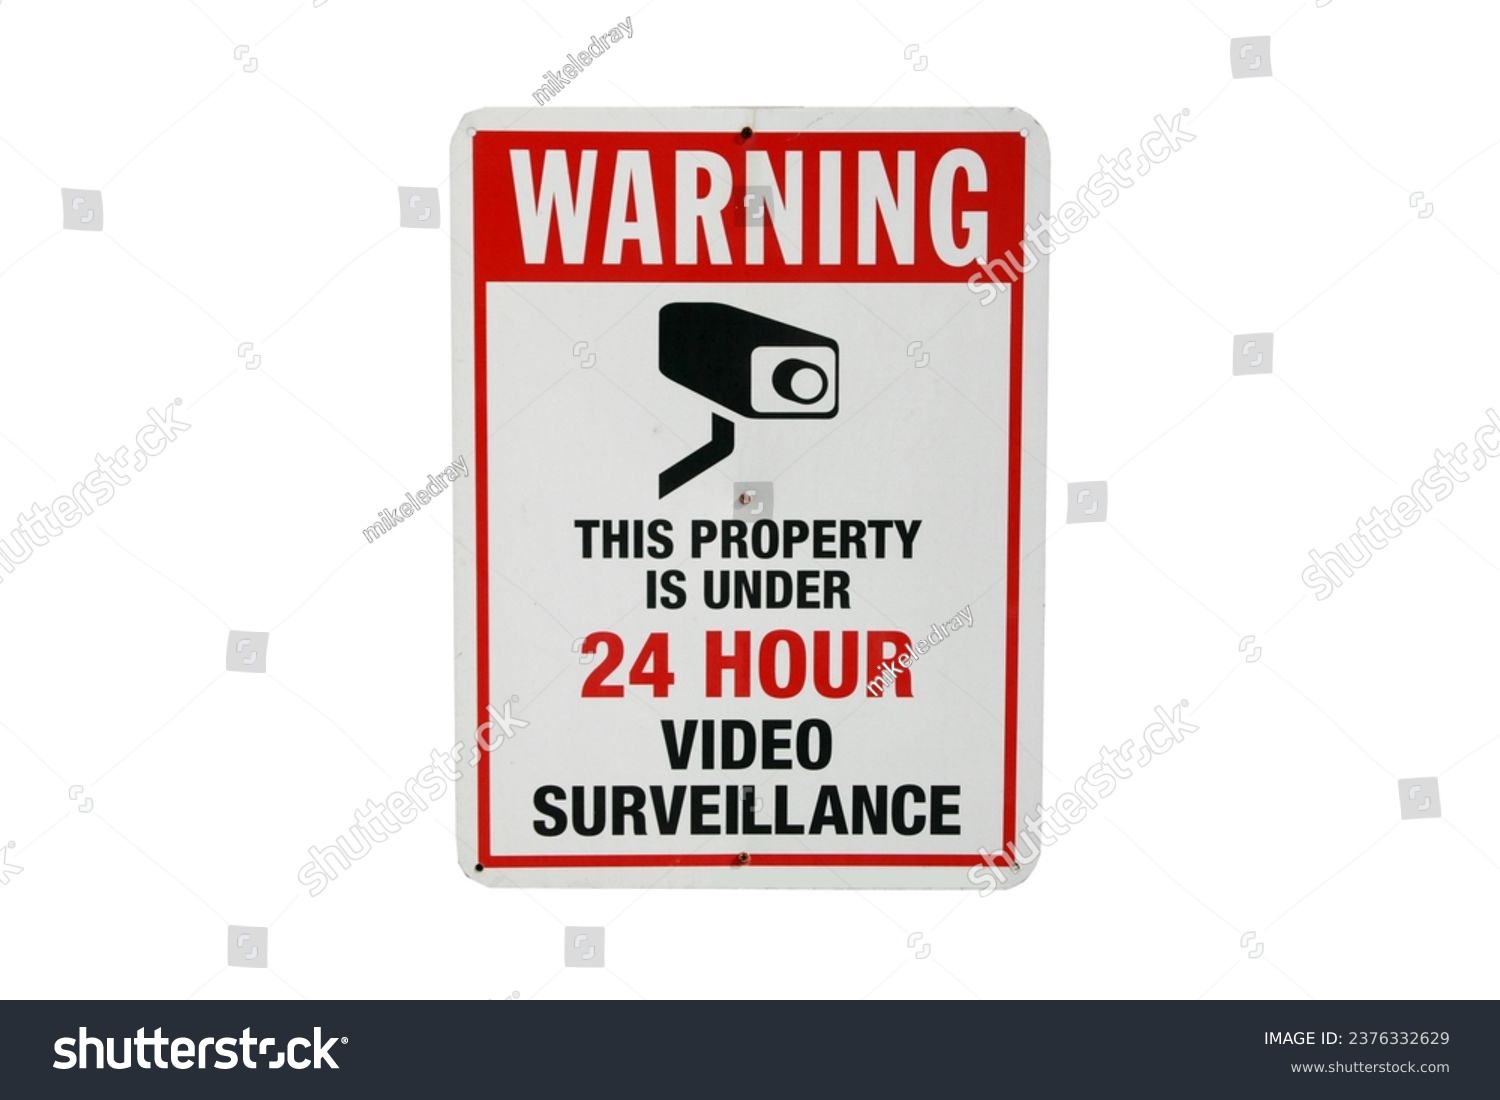 Warning 24 hour VIDEO SURVEILLANCE. Video Surveillance sign. Warning Sign. Caution sign. Video Camera in use. Warning security camera in use. No Trespassing. Warning. 24 Hour Video. CCTV Camera.  #2376332629